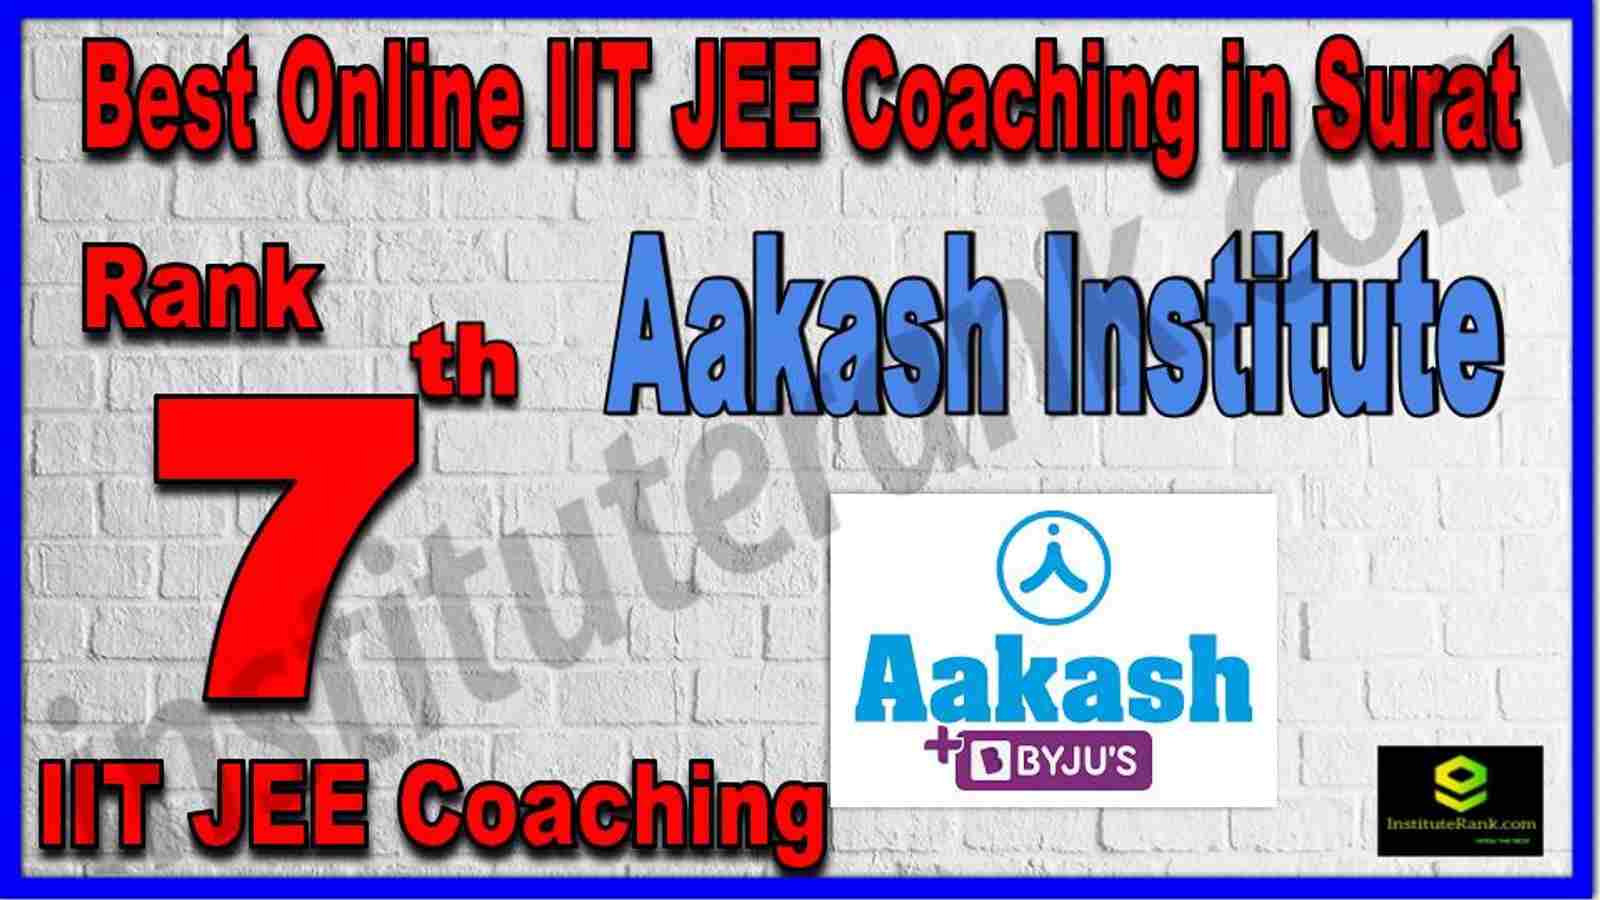 Rank 7th Best Online IIT JEE Coaching in Surat